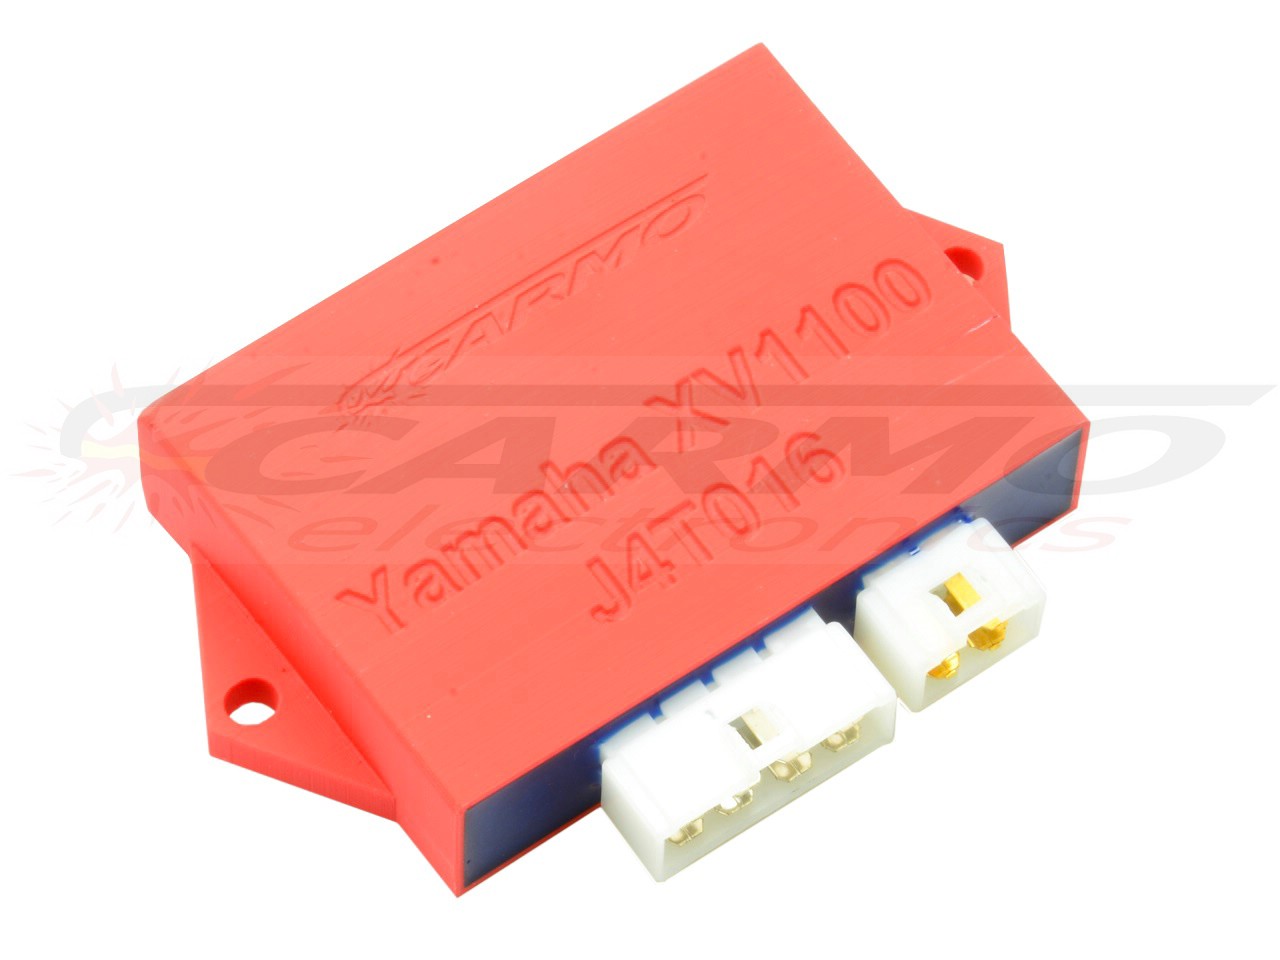 Yamaha XV1100 virago igniter ignition module CDI TCI Box (J4T016, 1TA-82305-20-00) - Click Image to Close